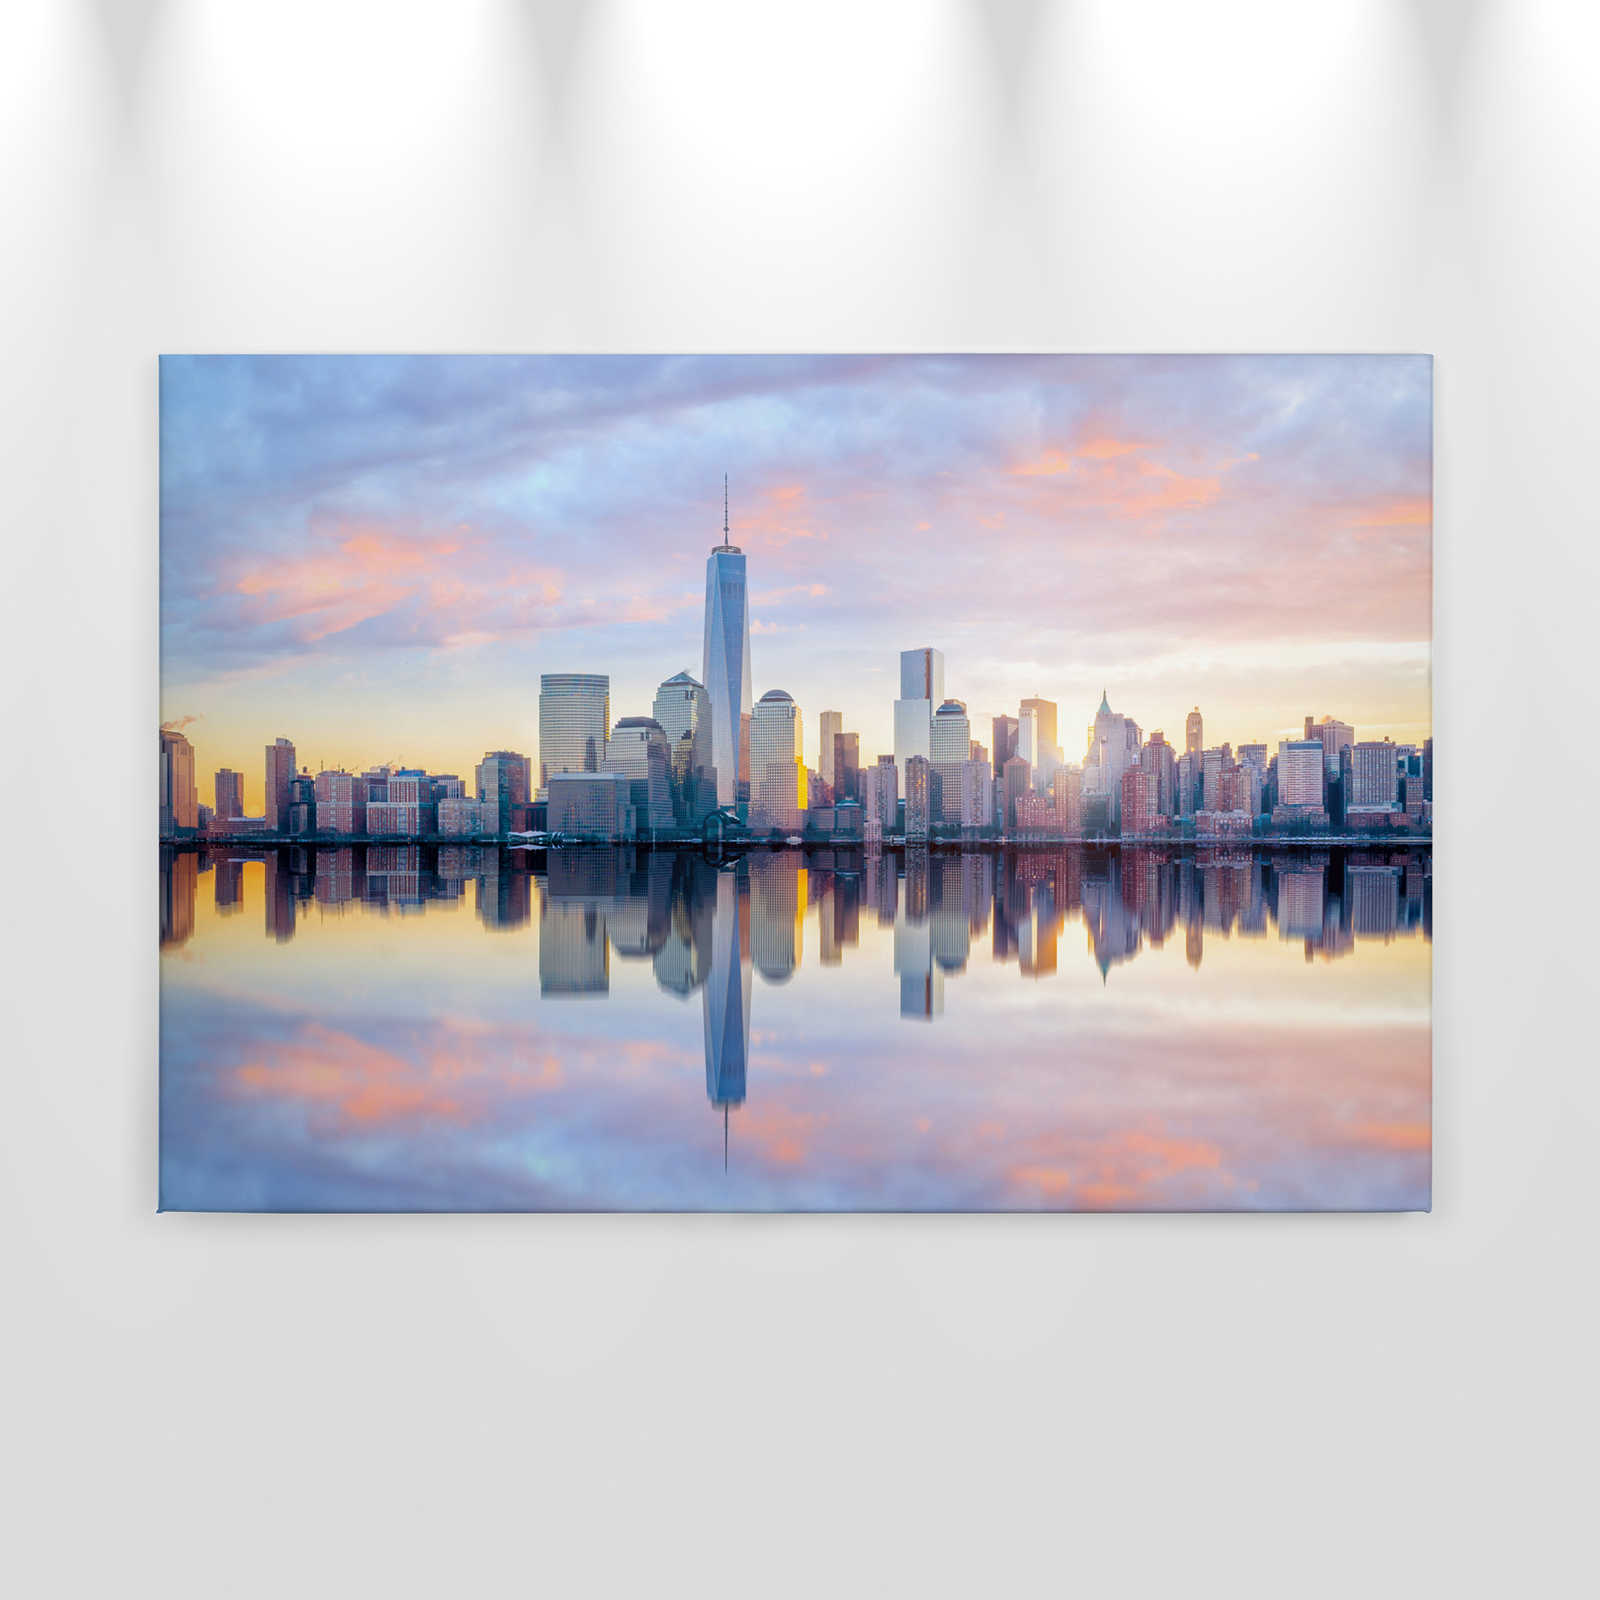             Tela New York Morning Skyline - 0,90 m x 0,60 m
        